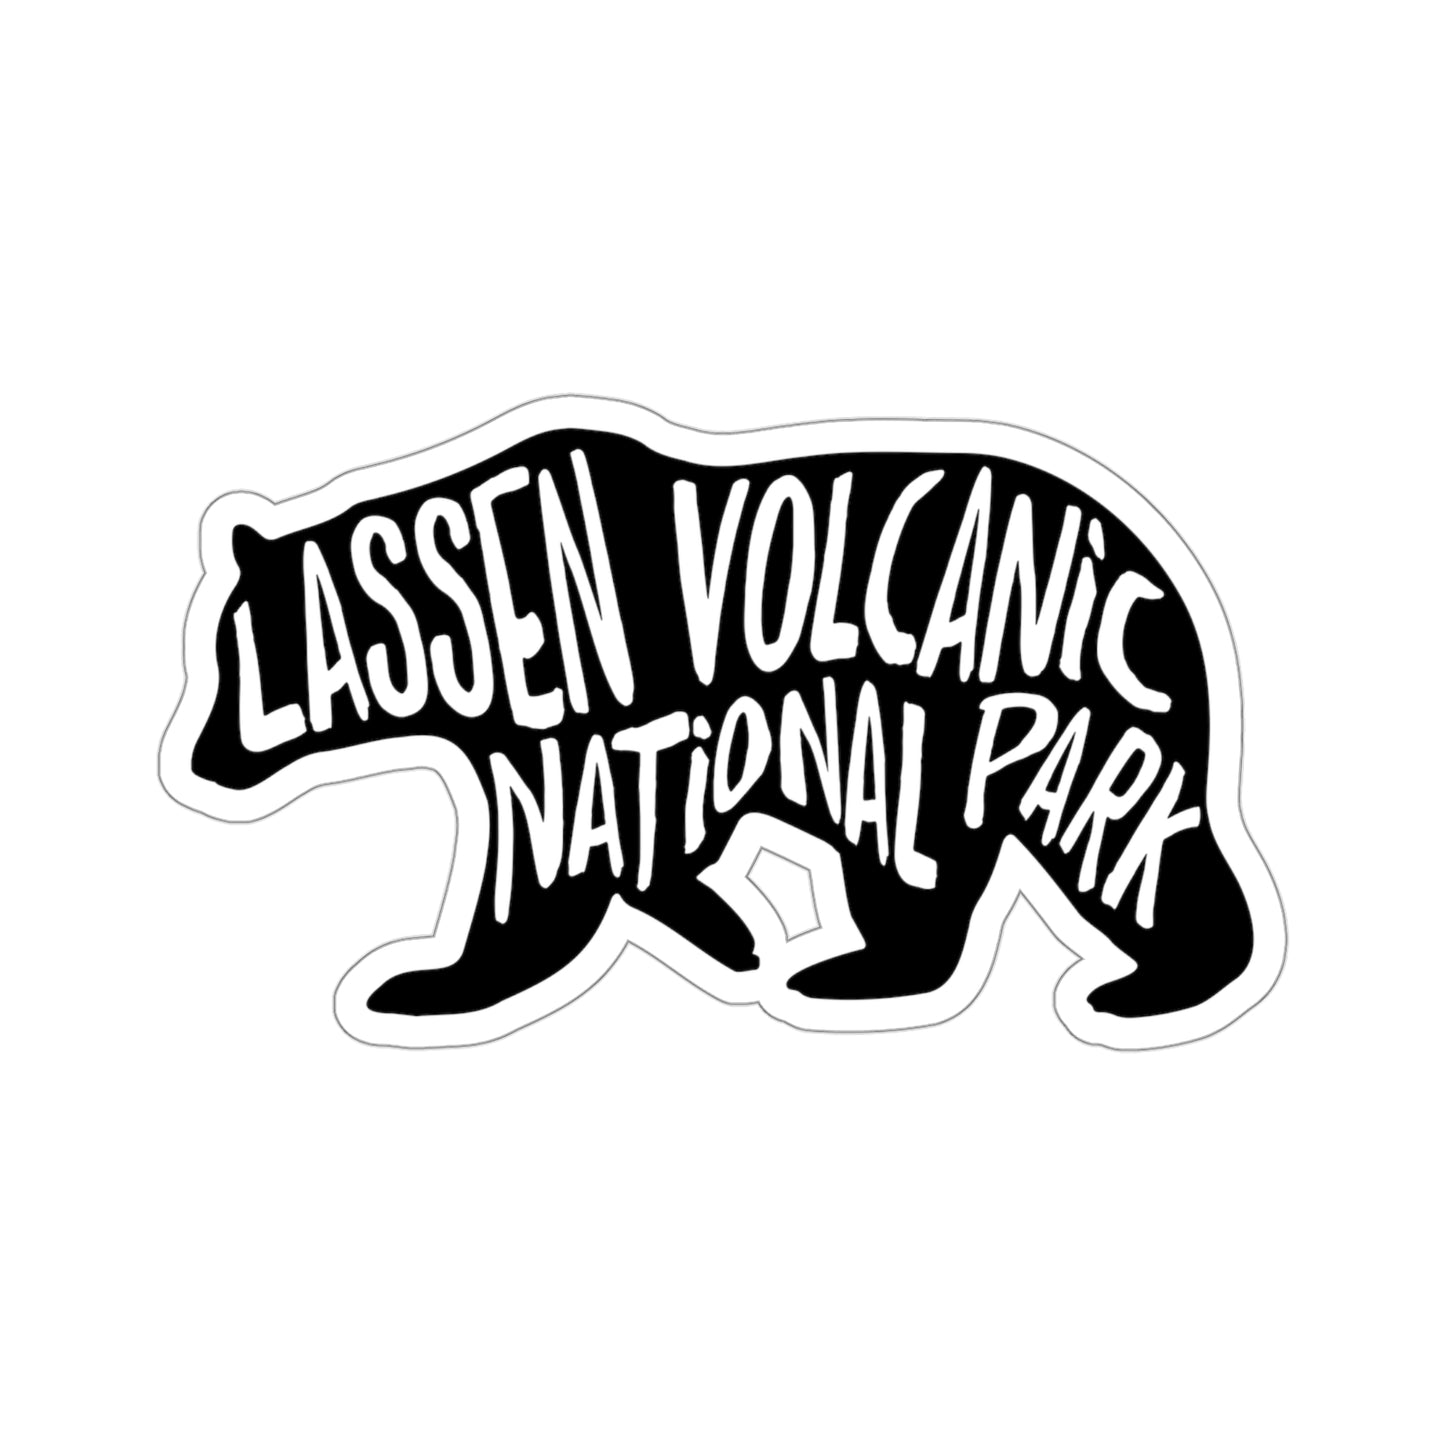 Lassen Volcanic National Park Sticker - Moose